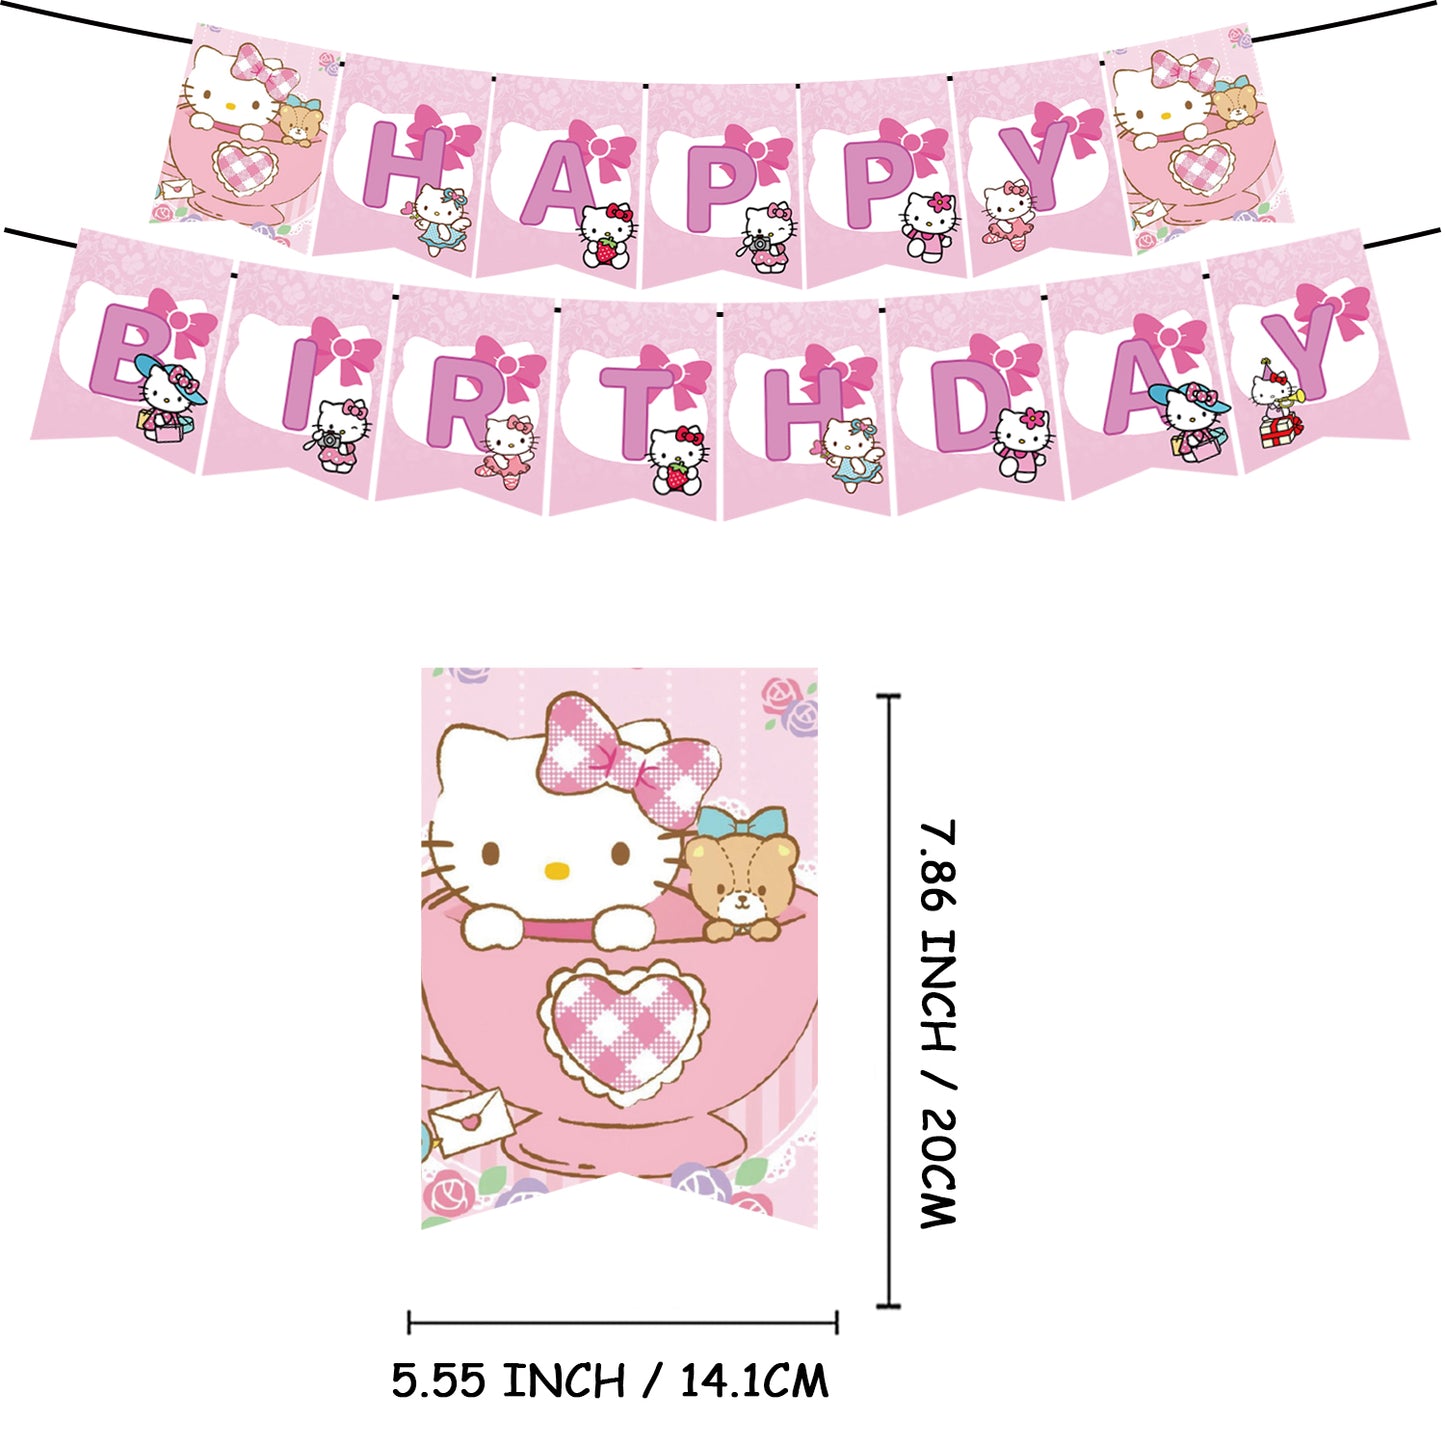 Hello Kitty Birthday Decorations - Party Corner - BM Trading